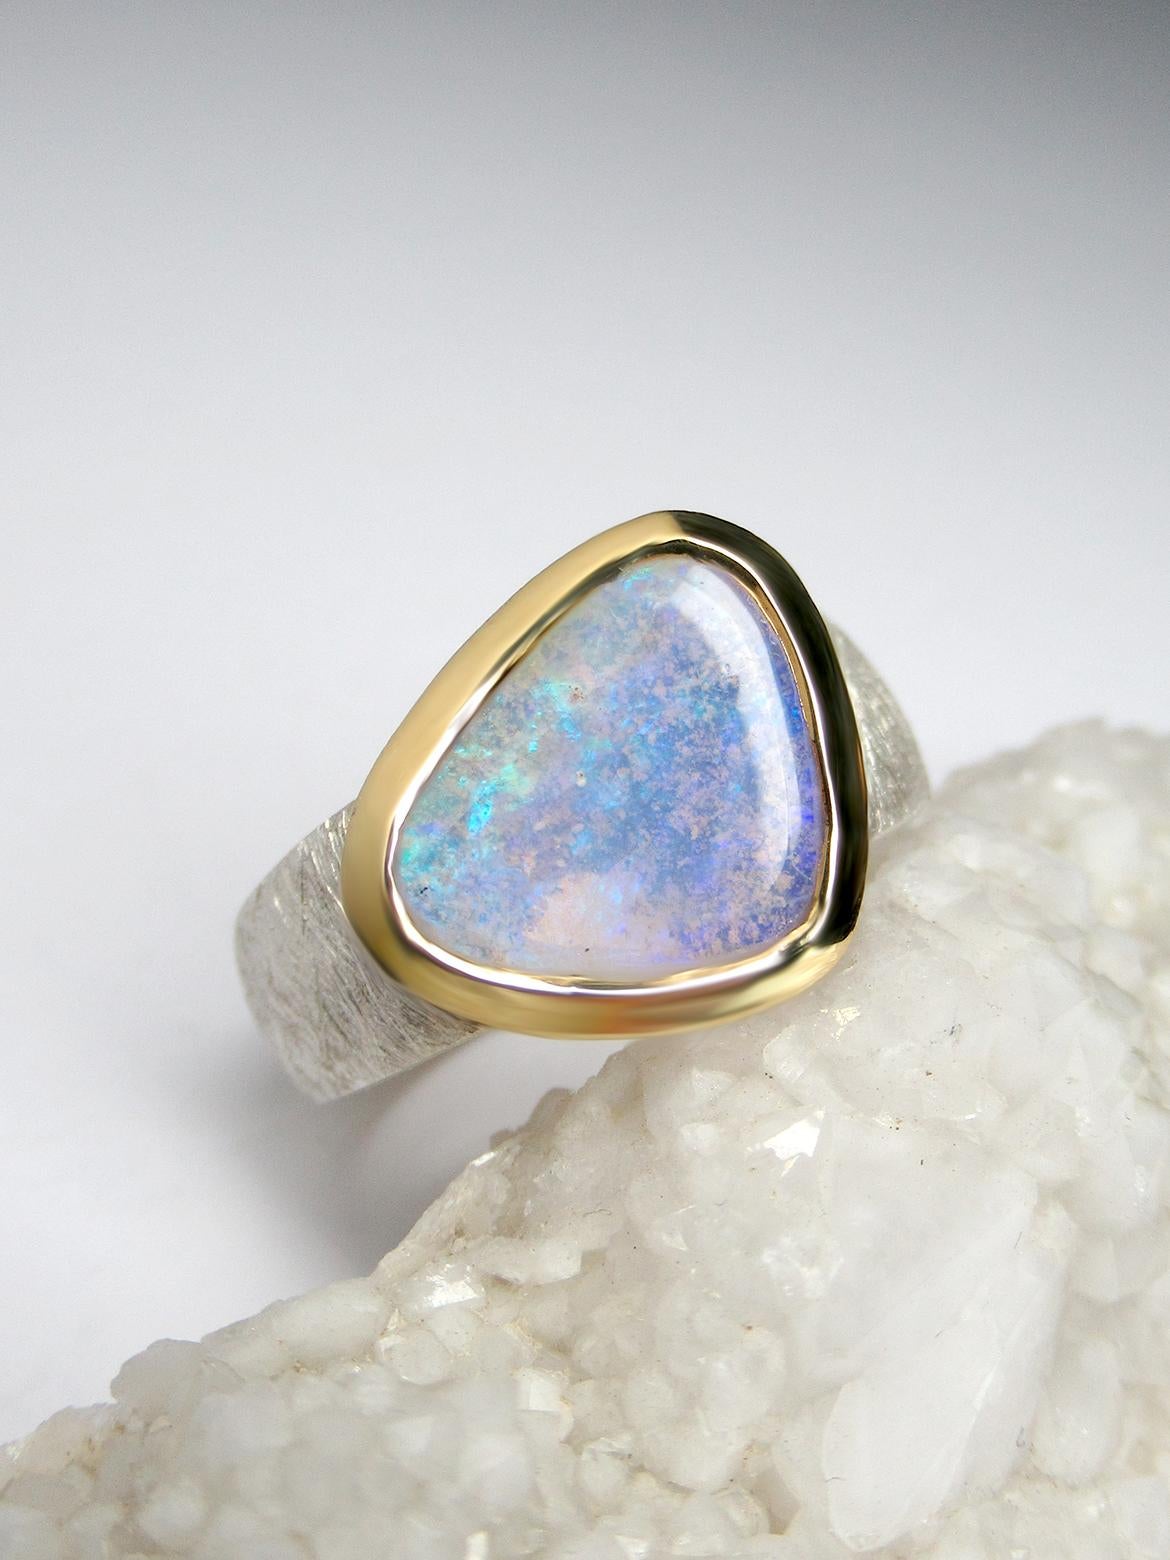 Australian Crystal Opal Ring Silver 18K Gold neon wedding anniversary In New Condition For Sale In Berlin, DE